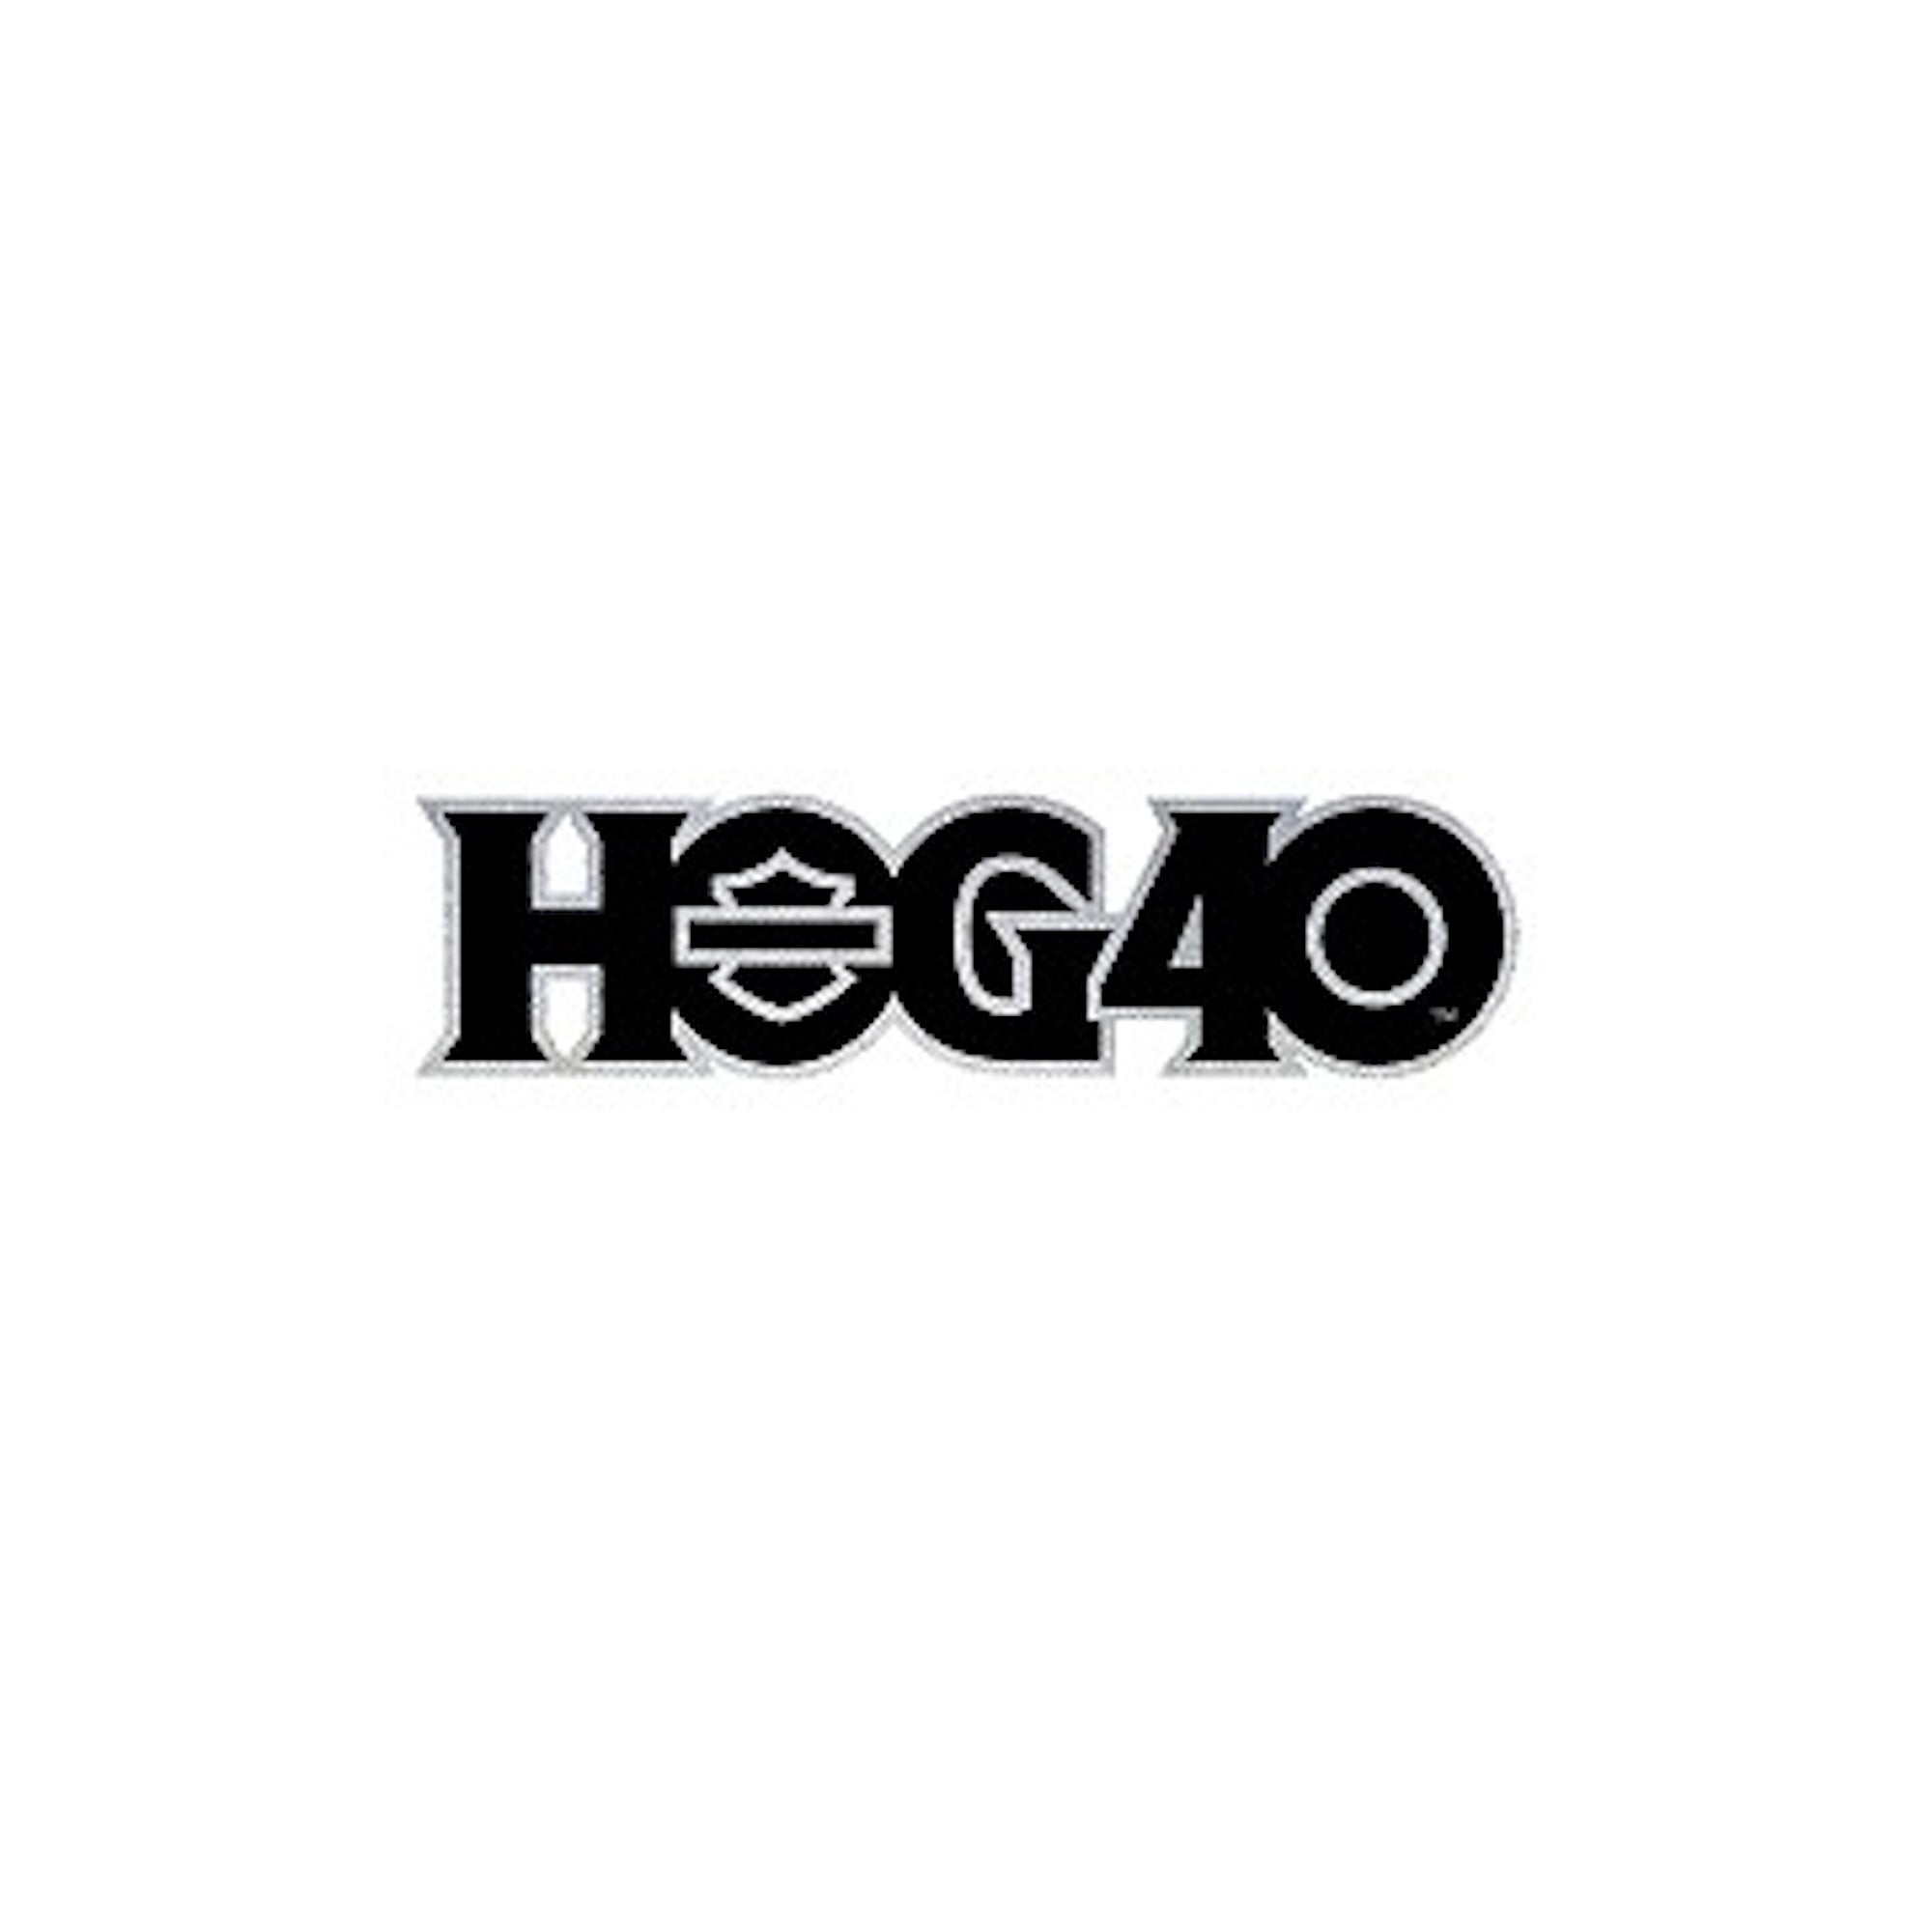 Toppa con logo HOG40 - Piccola